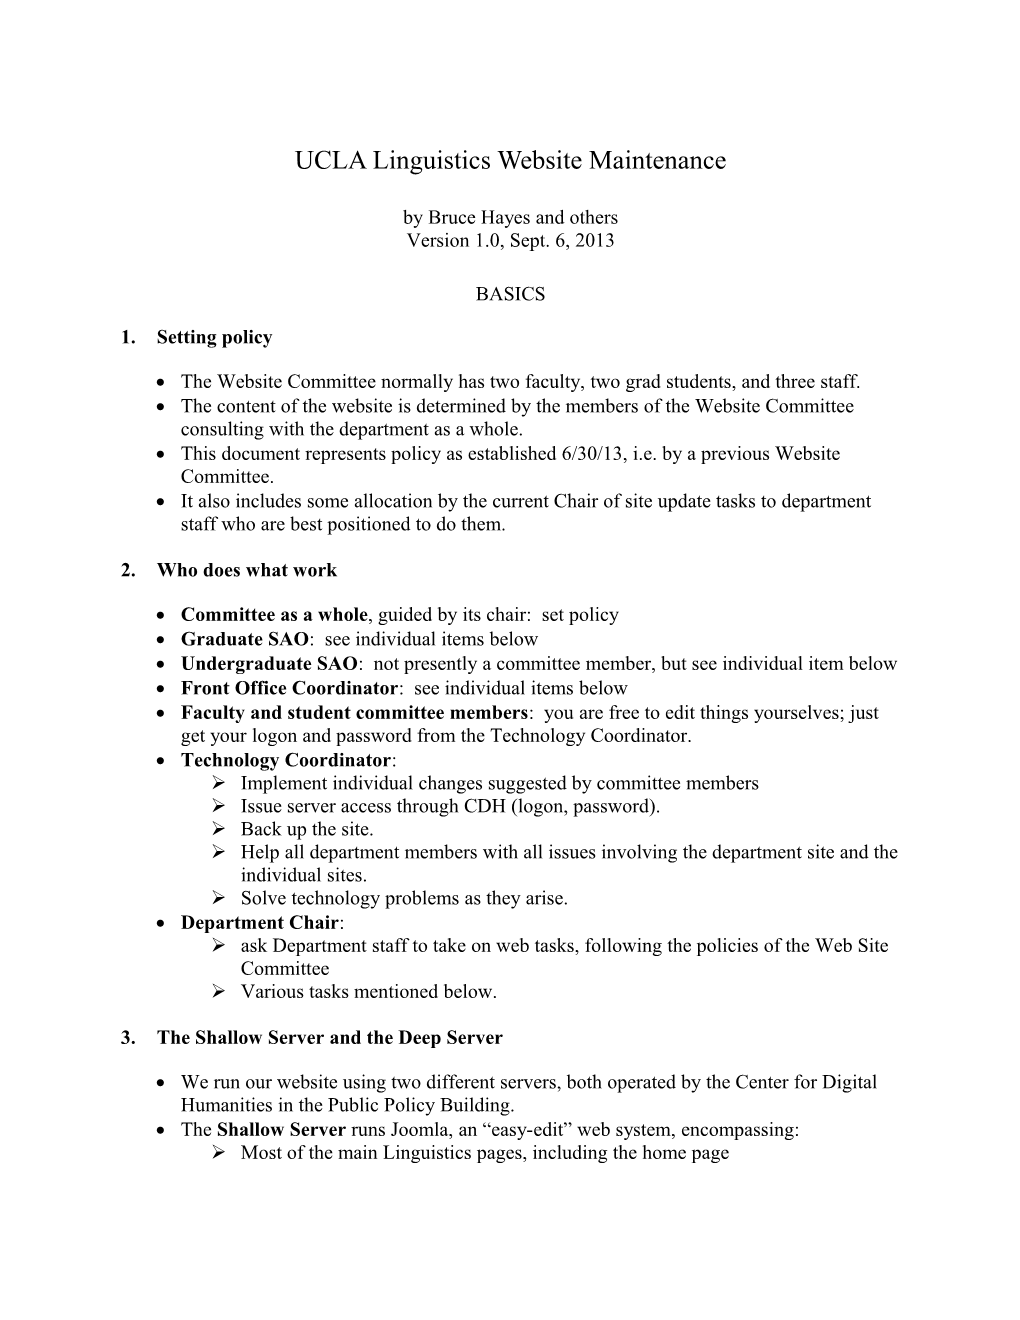 UCLA Linguistics Website Maintenancep. 1